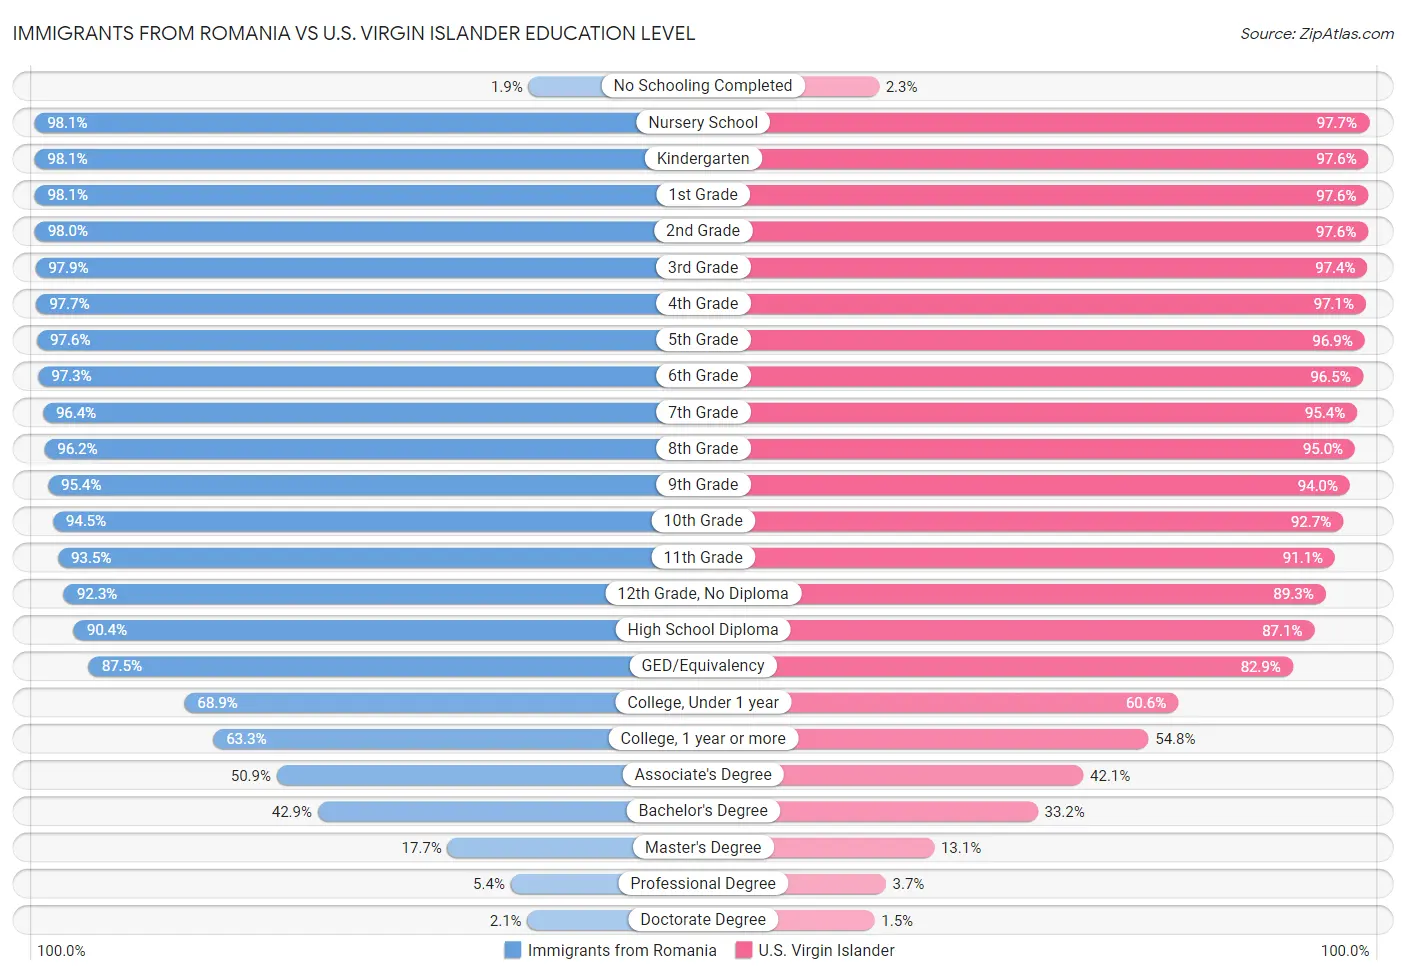 Immigrants from Romania vs U.S. Virgin Islander Education Level